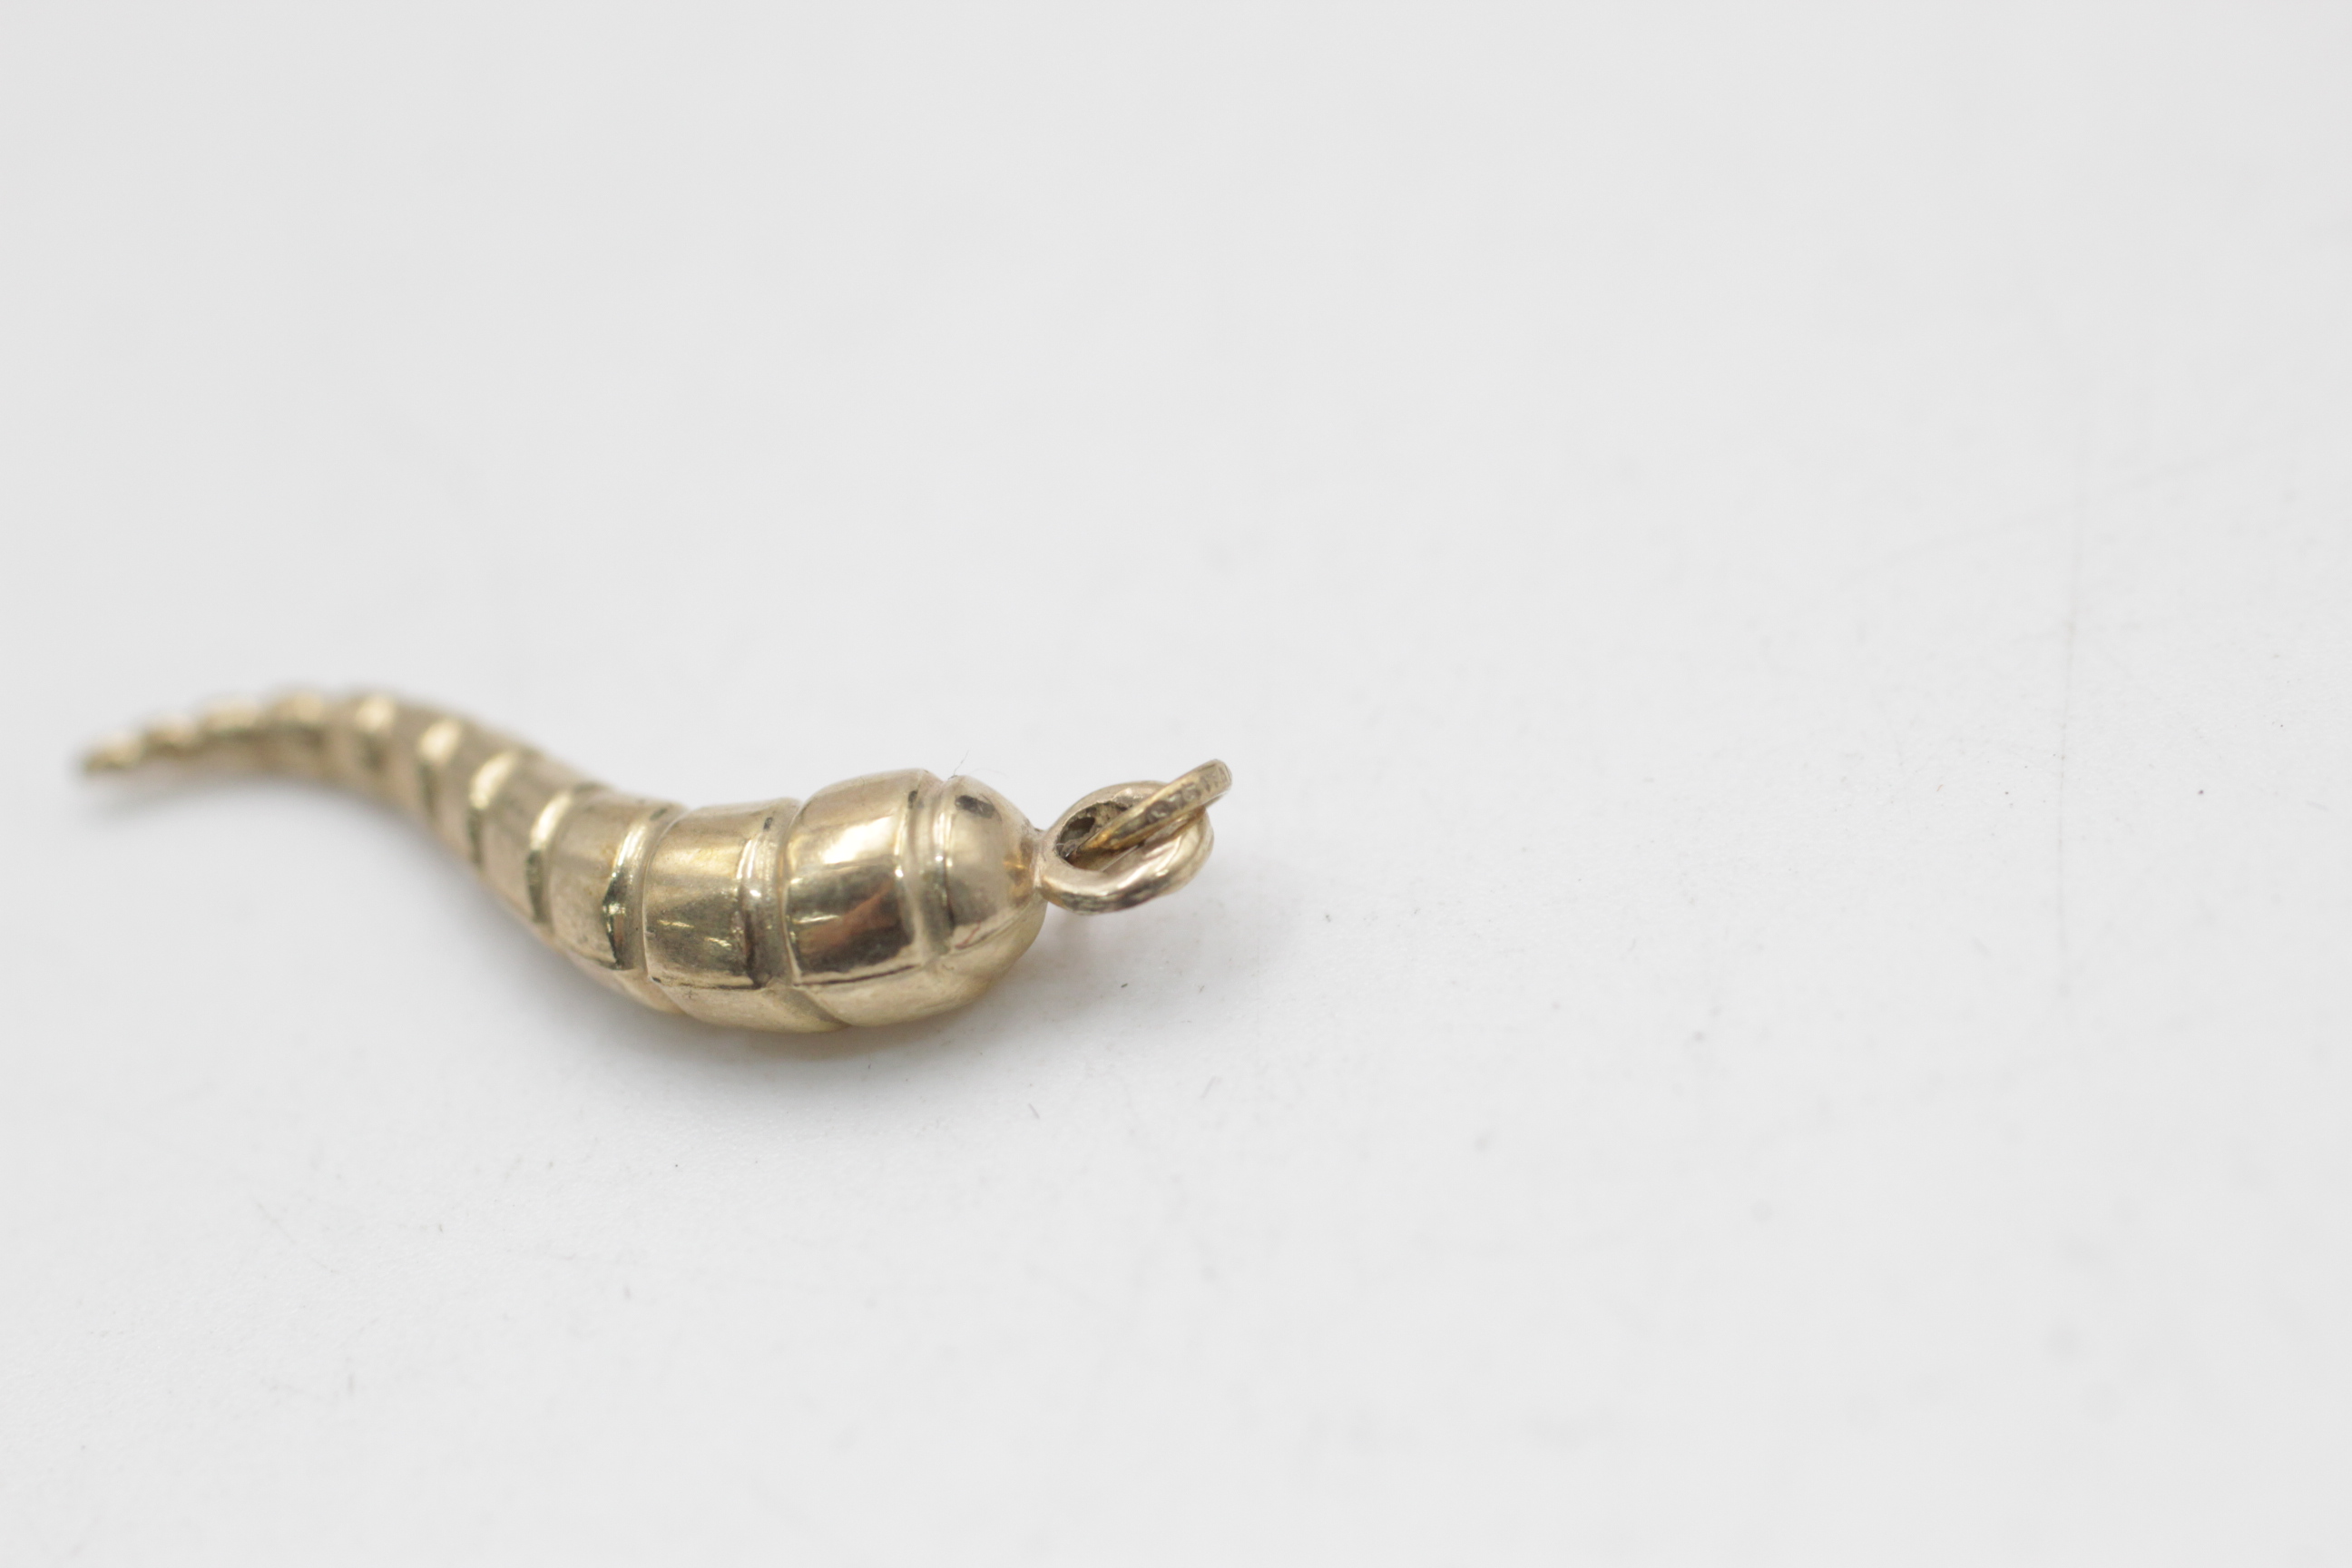 9ct gold horn of plenty charm pendant (0.5g) - Image 4 of 4